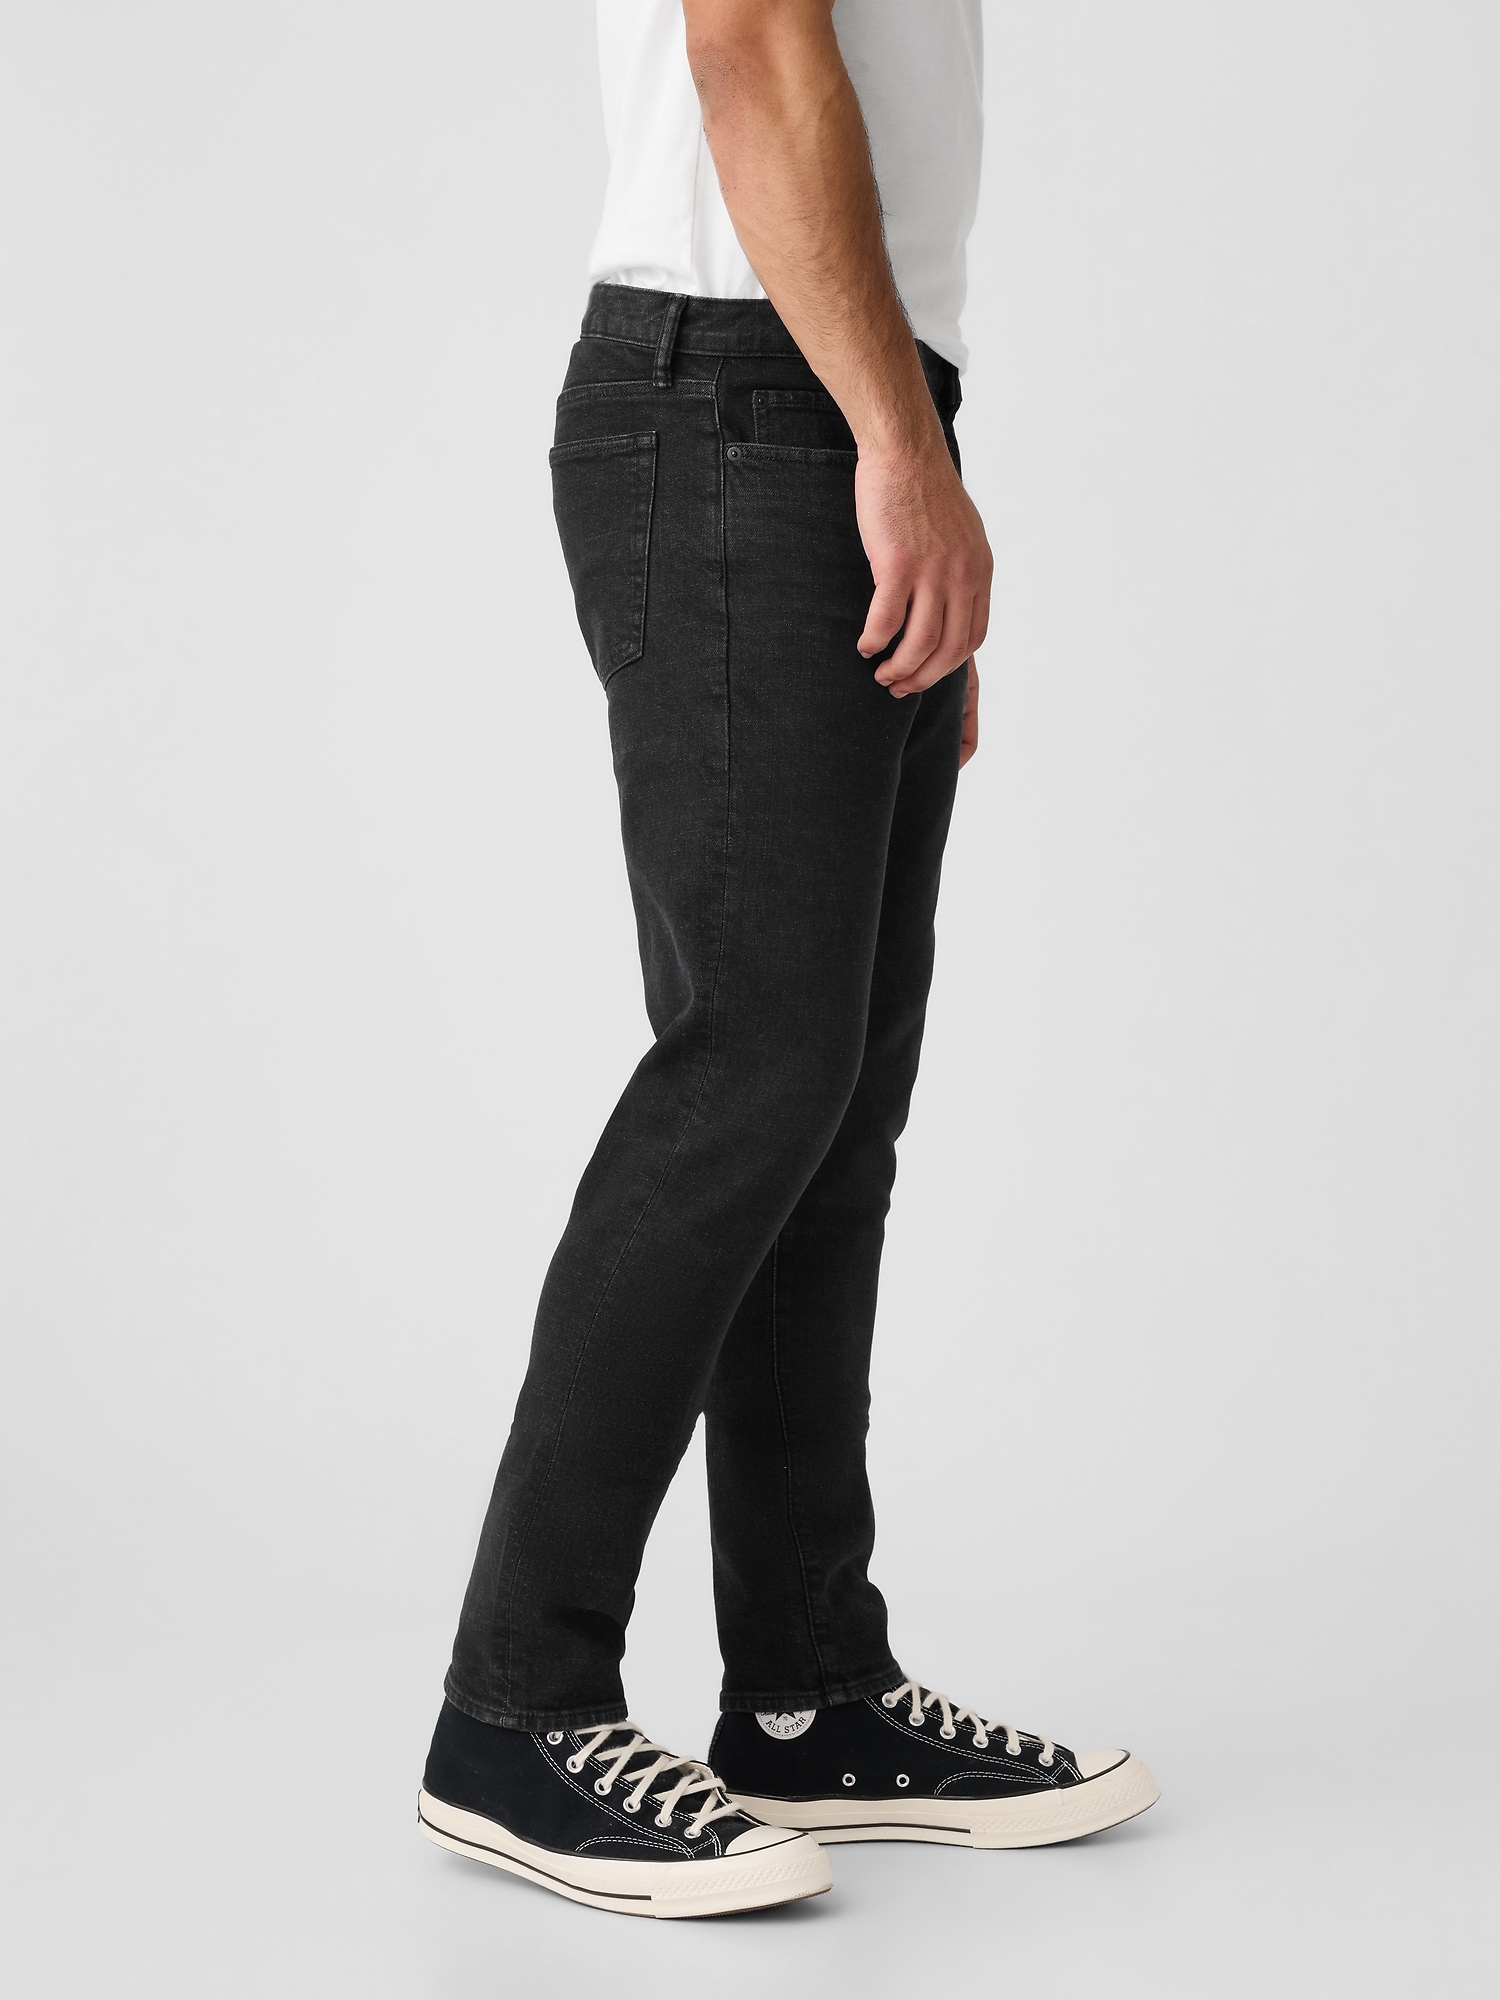 Skinny GapFlex Jeans - Men